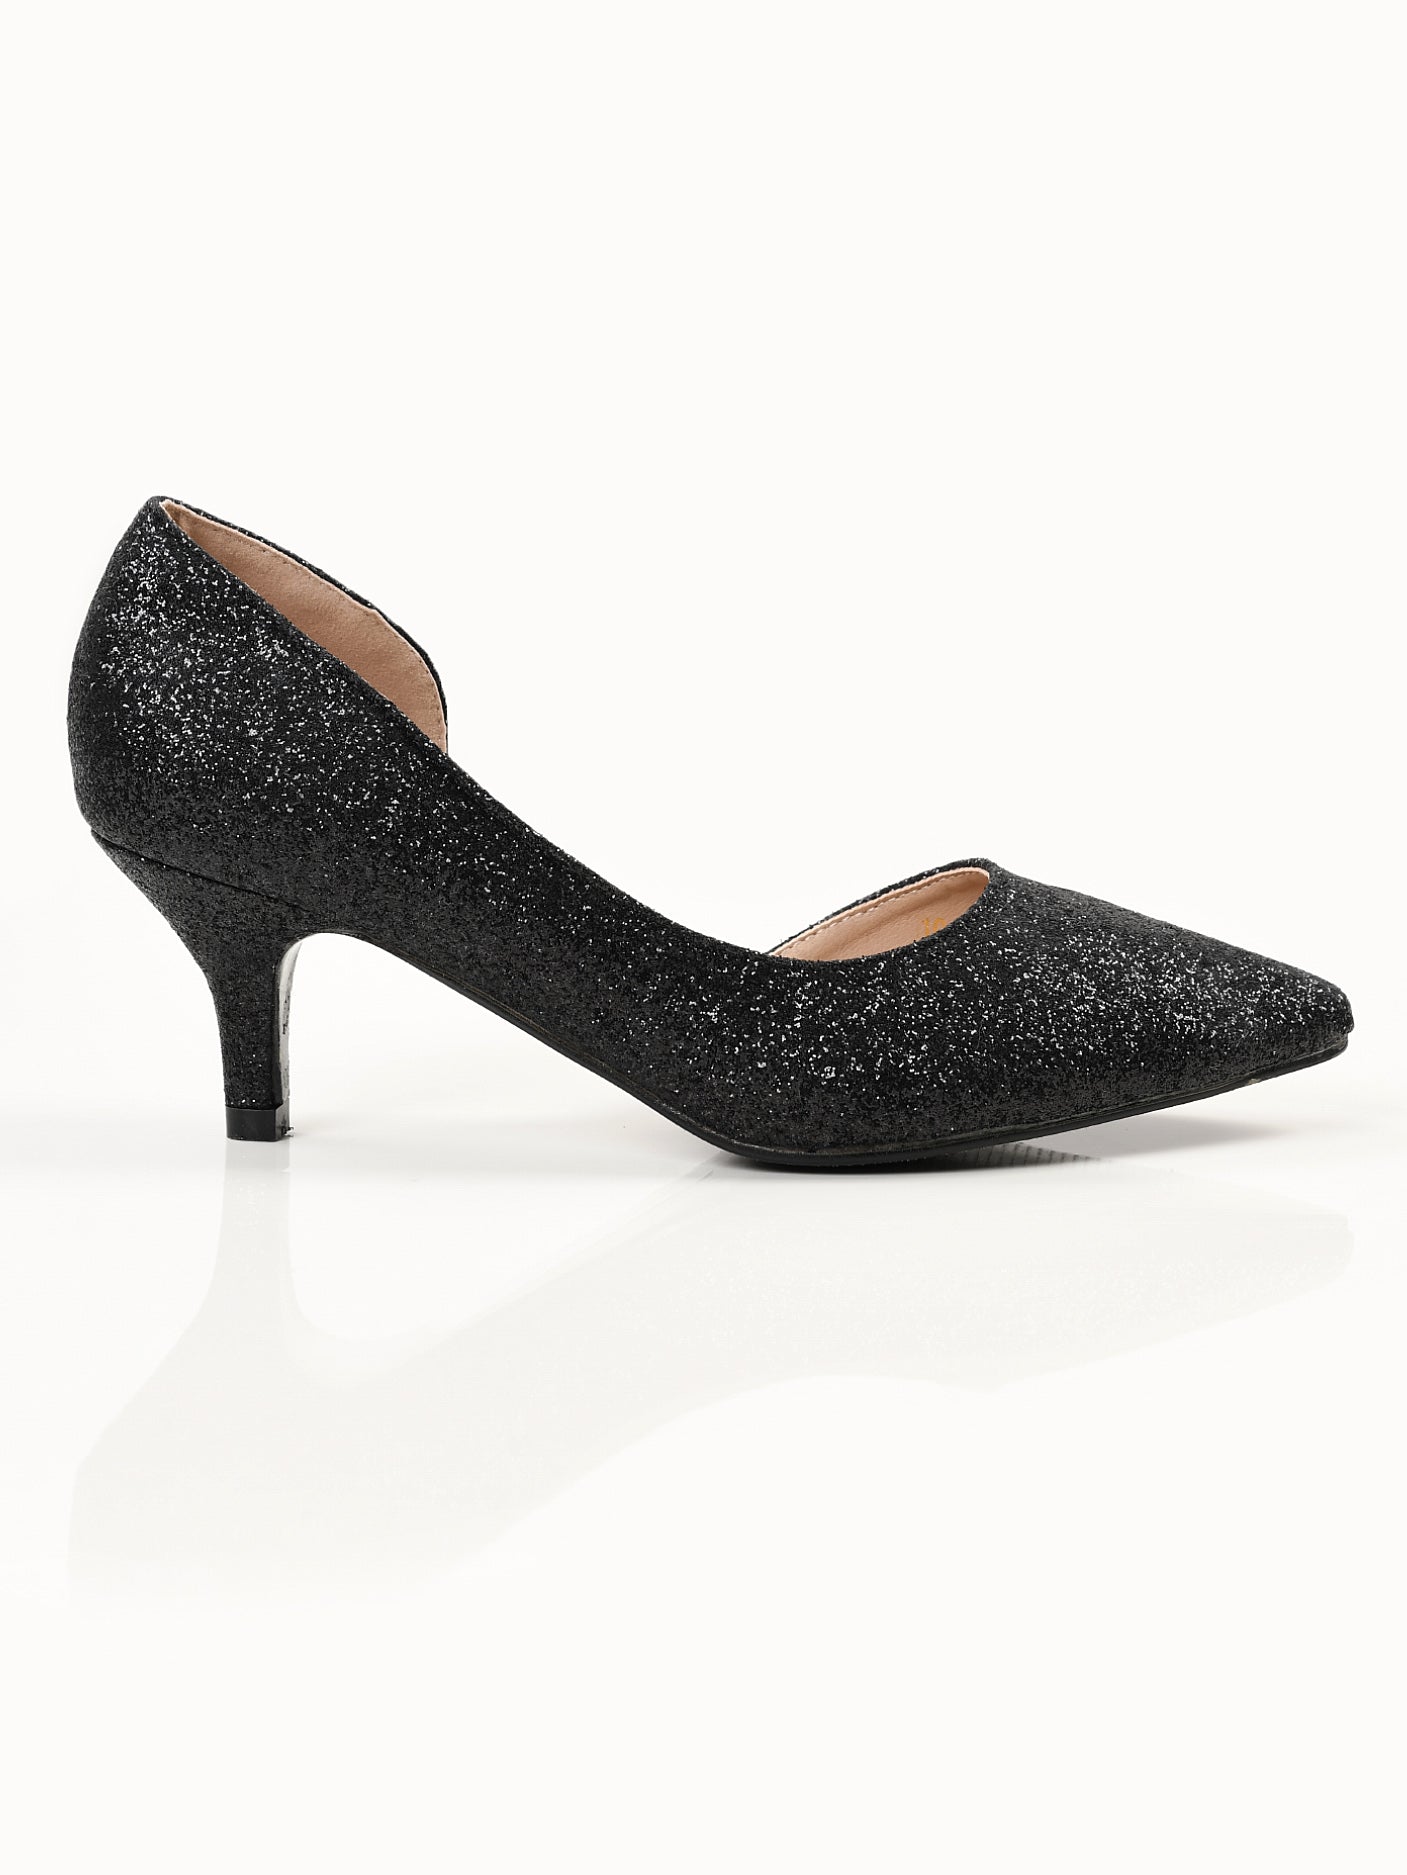 Nine West Black Sparkly Heels 7 1/2, With 3 inch Wedge Heel | eBay